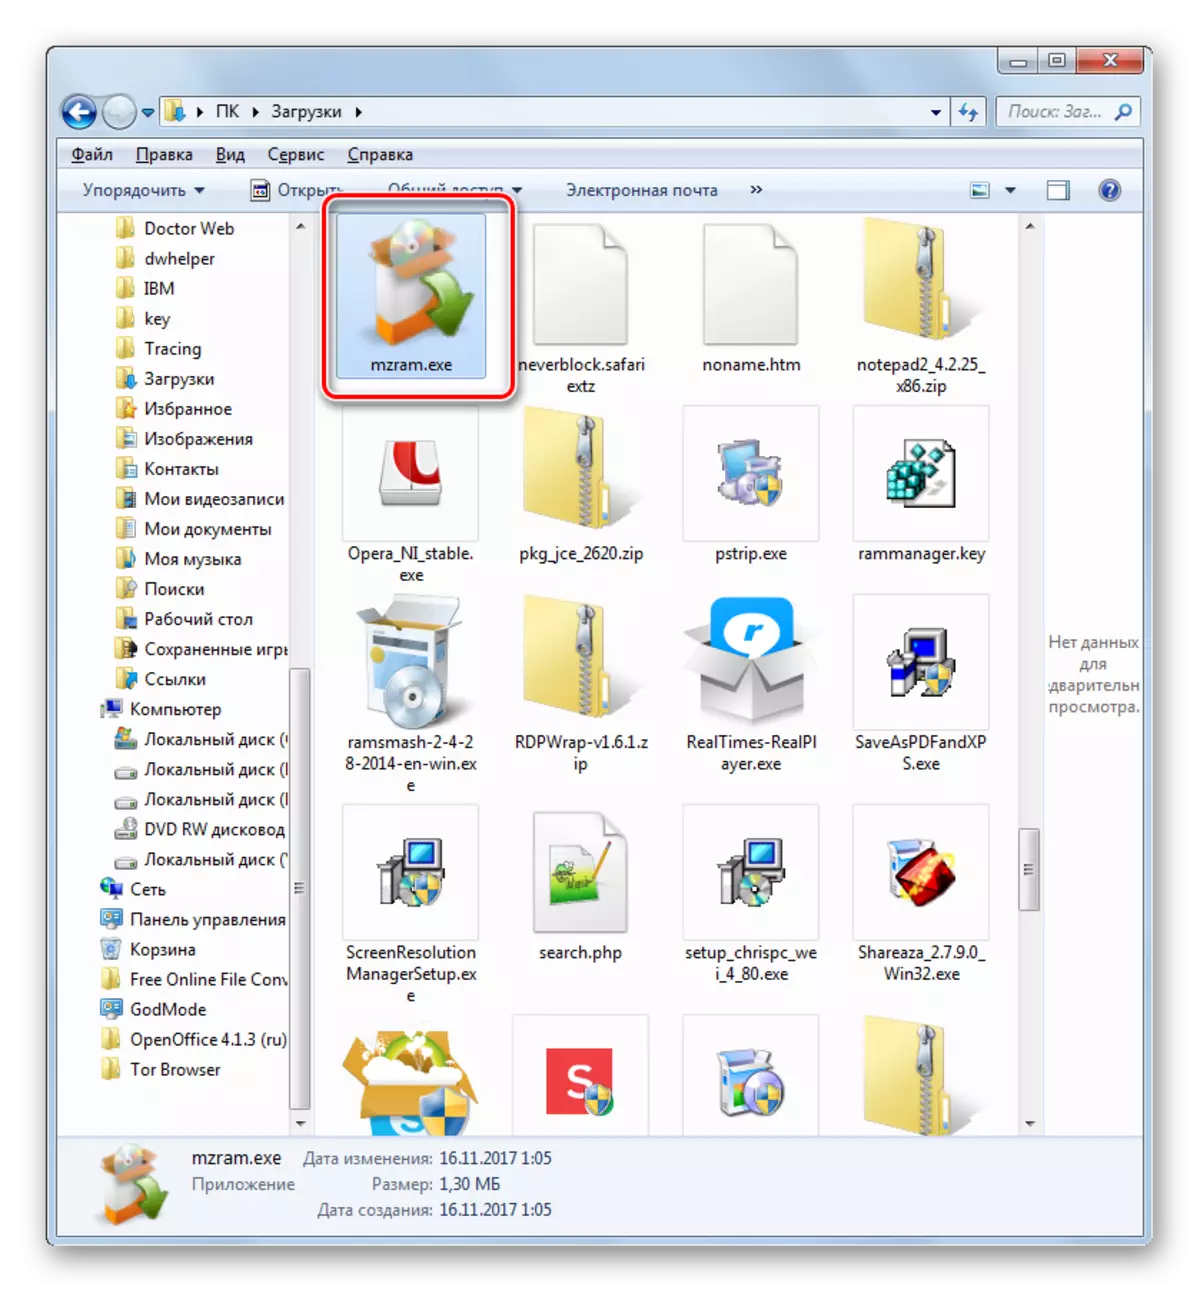 Windows 7 geçirijisinde programma öz-özüňi gowy bilýän re inimde programma başlamak